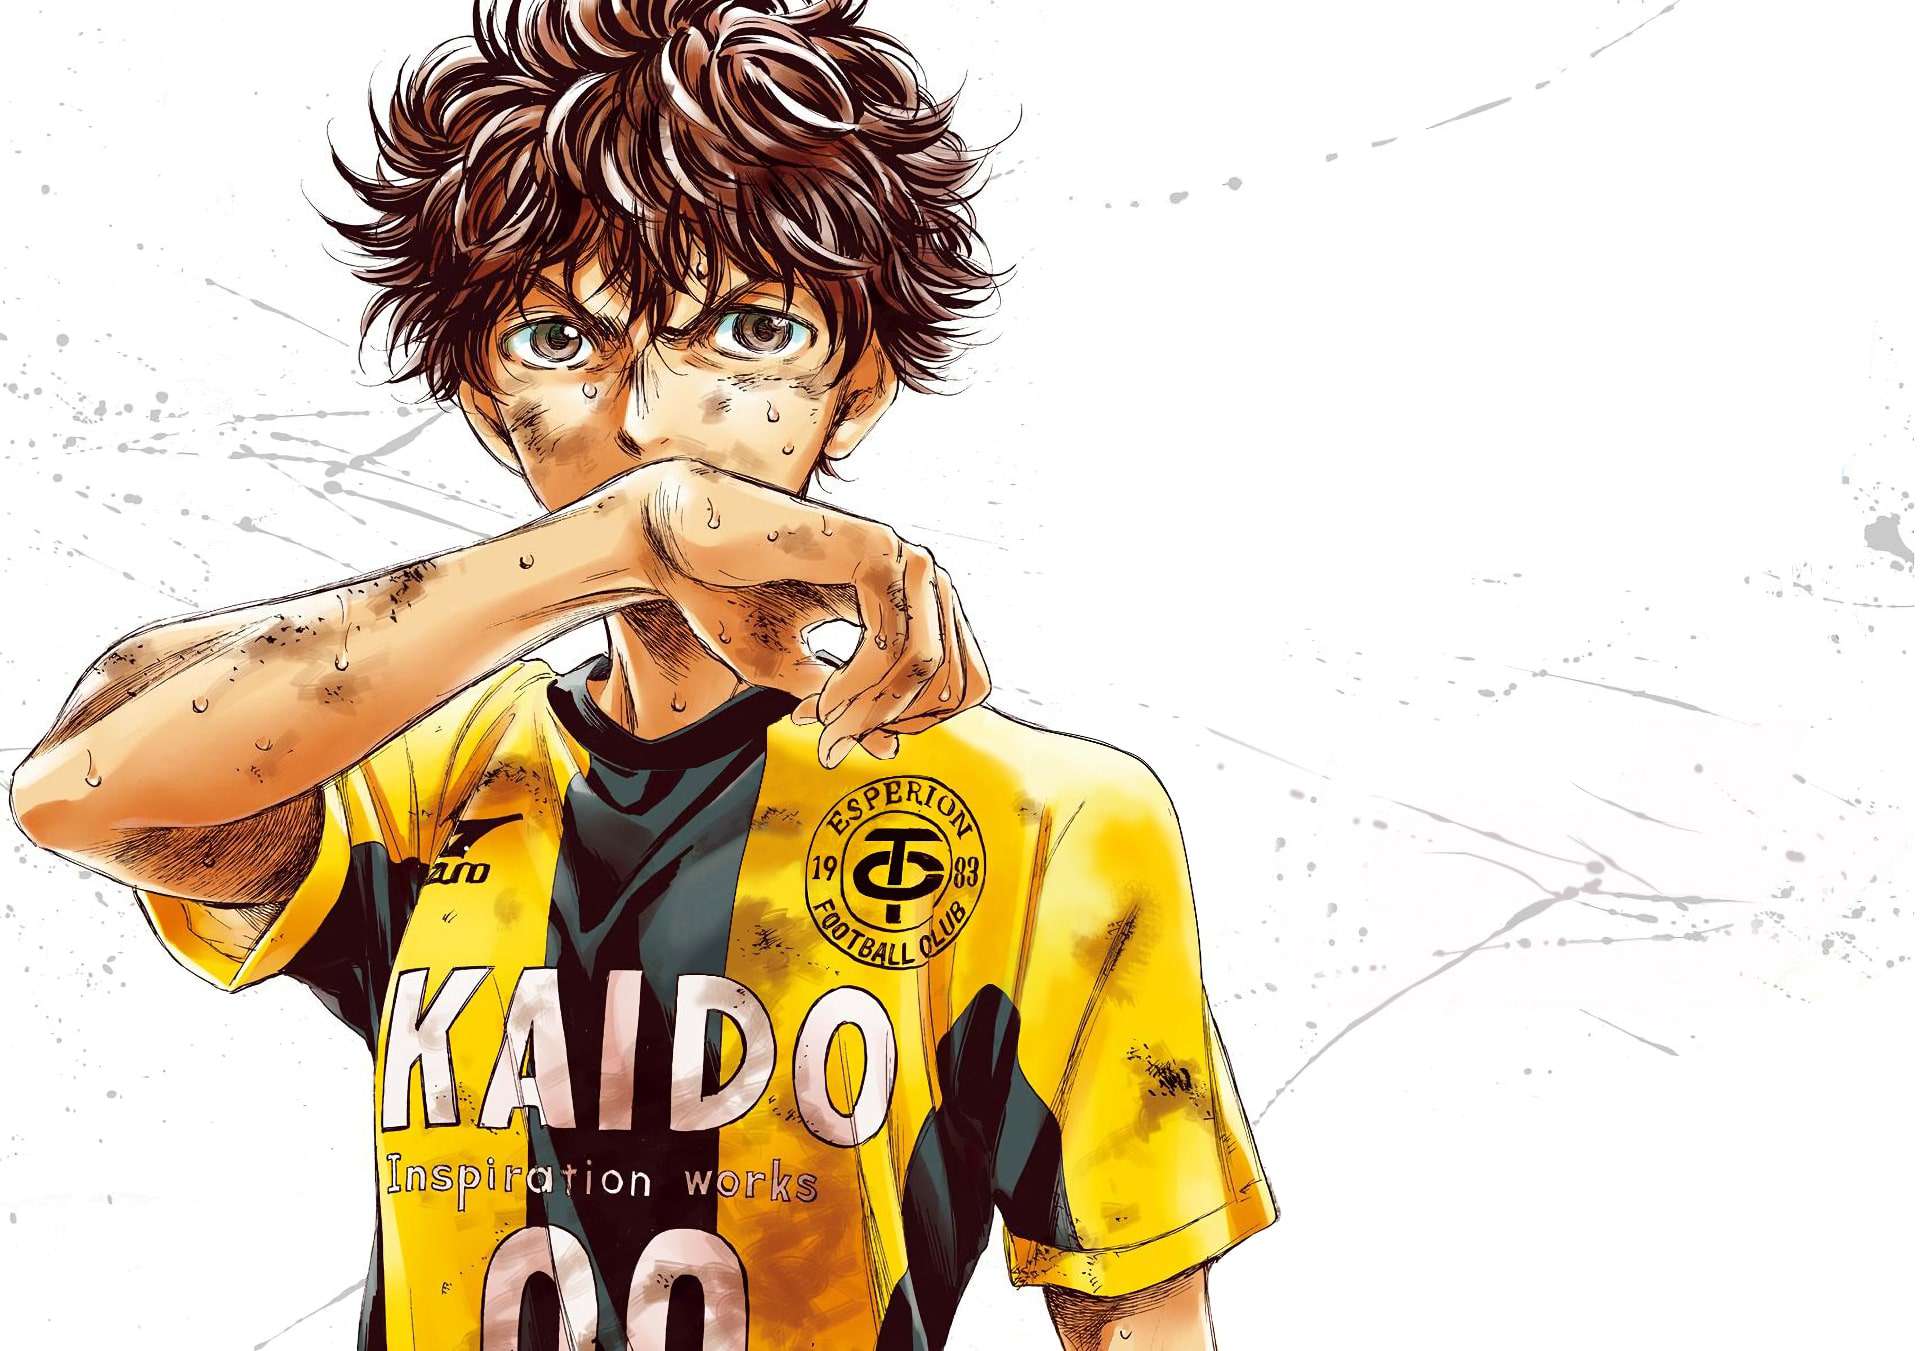 Read Ao ashi Manga [Latest Chapters]